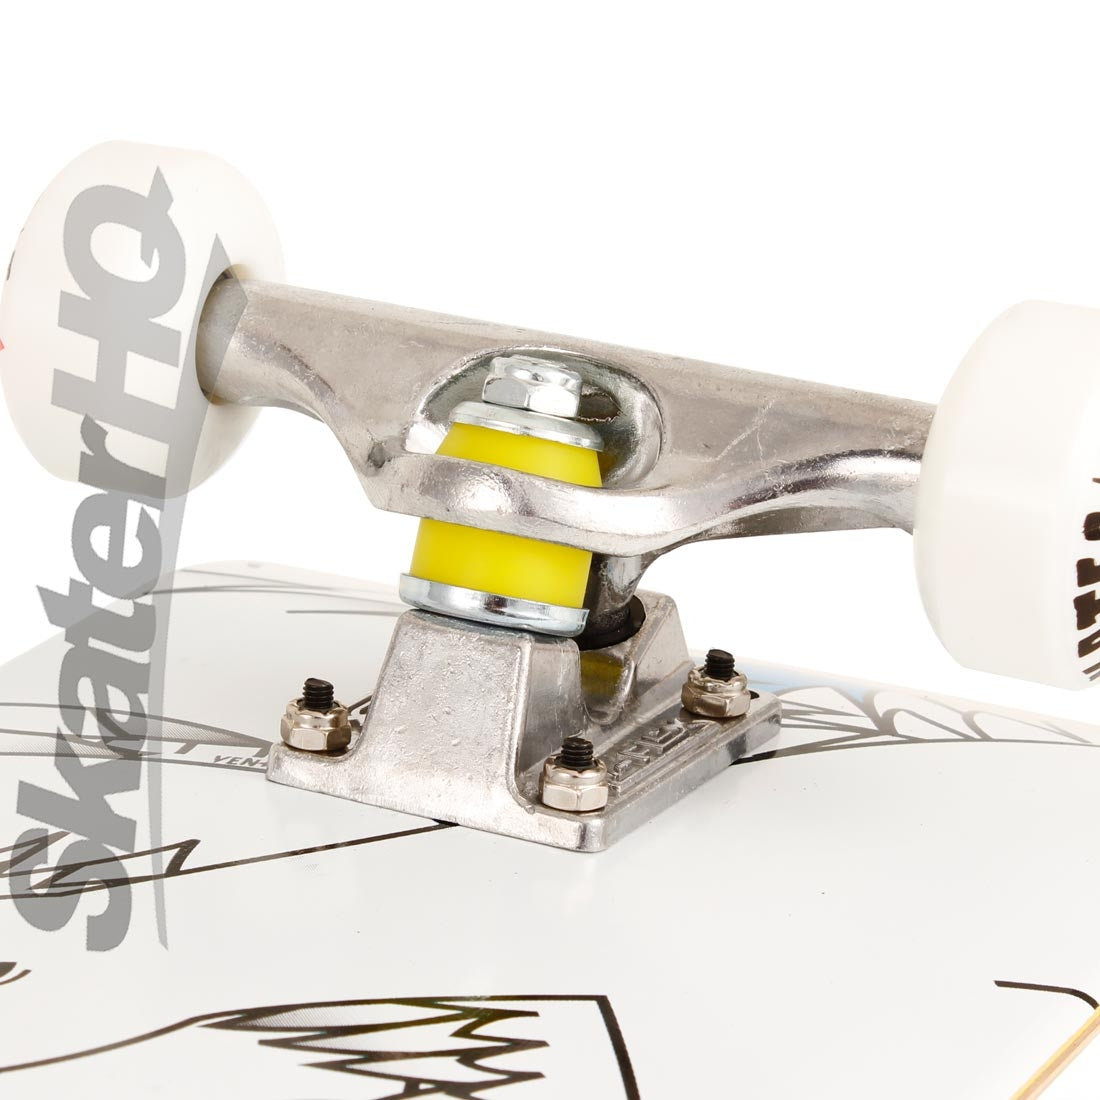 Skater HQ Seagulls 7.9 S Complete Skateboard Completes Modern Street